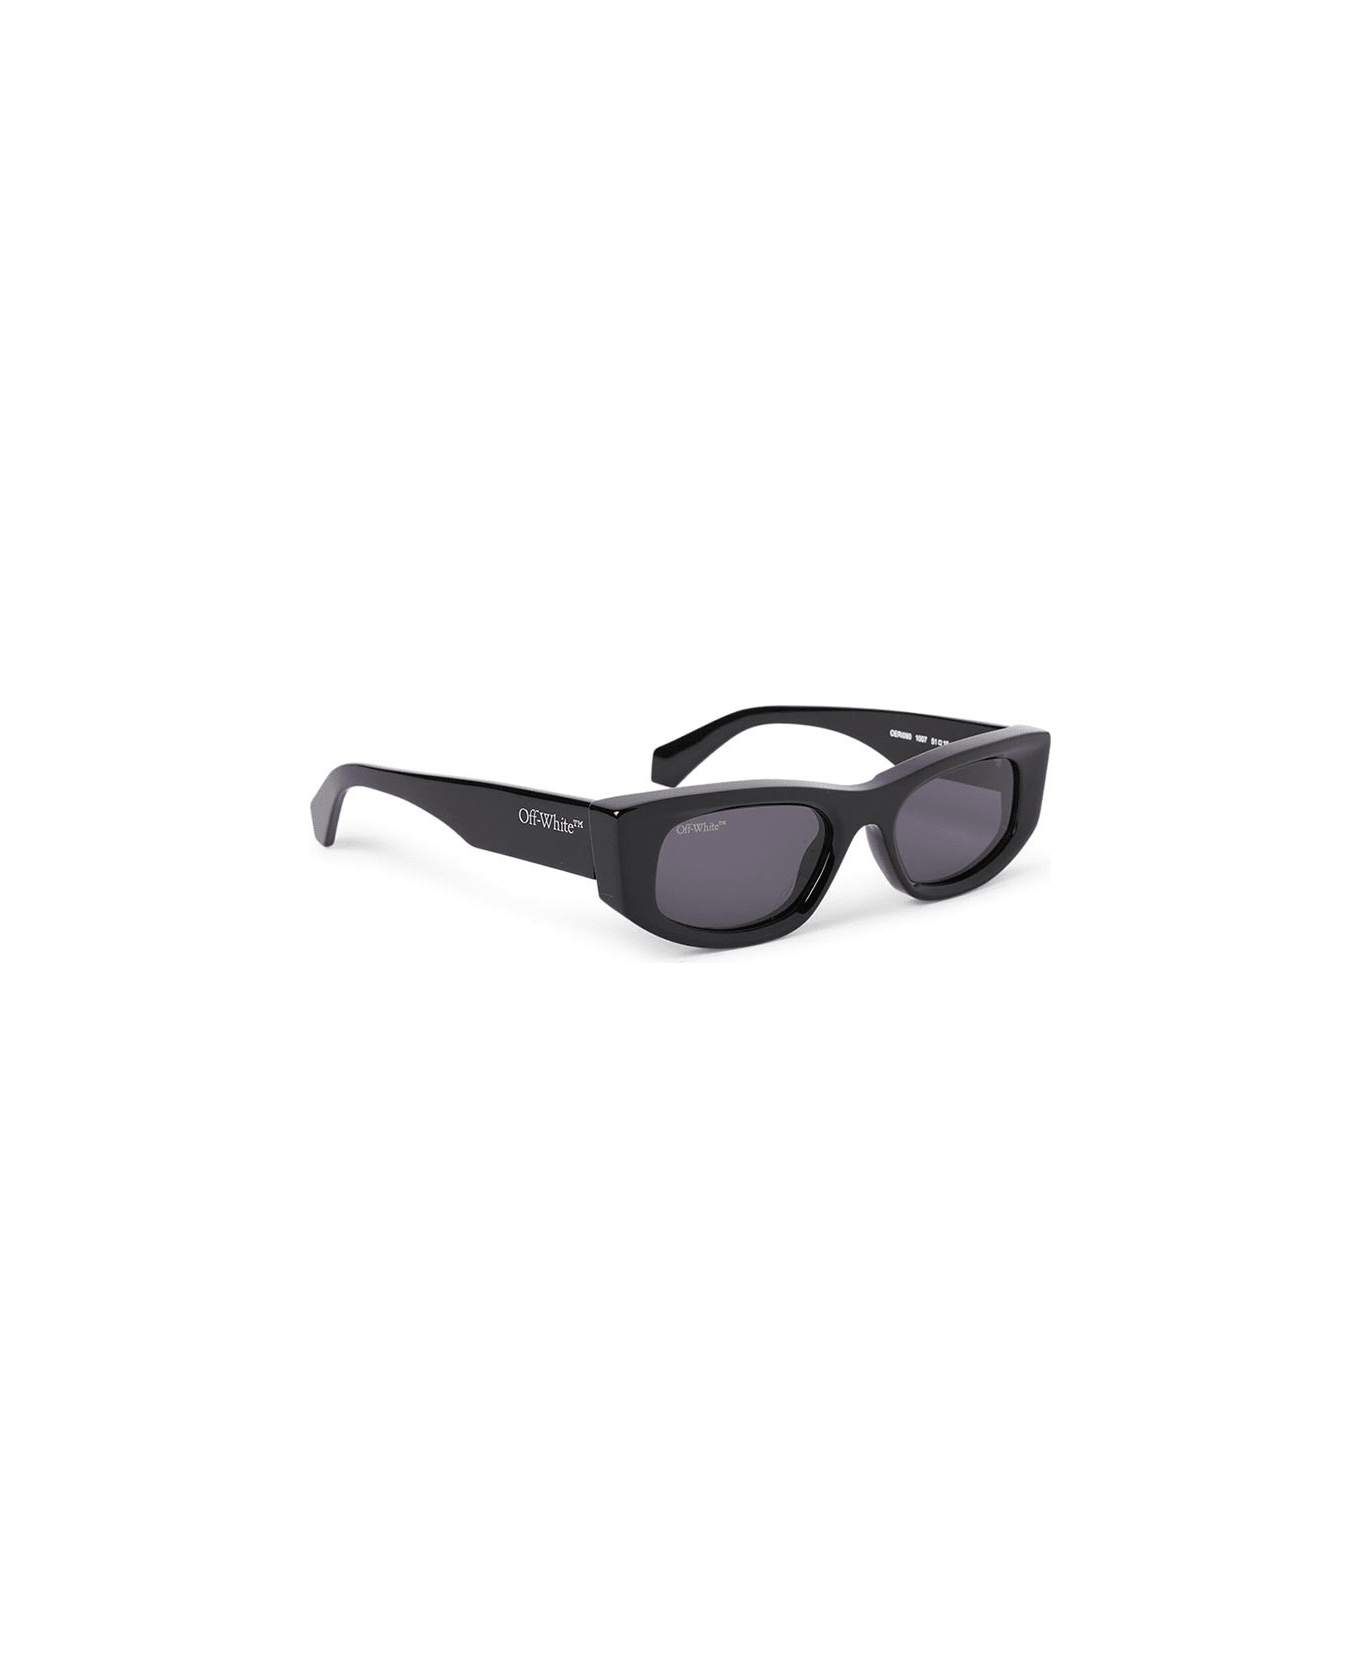 Off-White Matera Sunglasses - Nero/Grigio サングラス